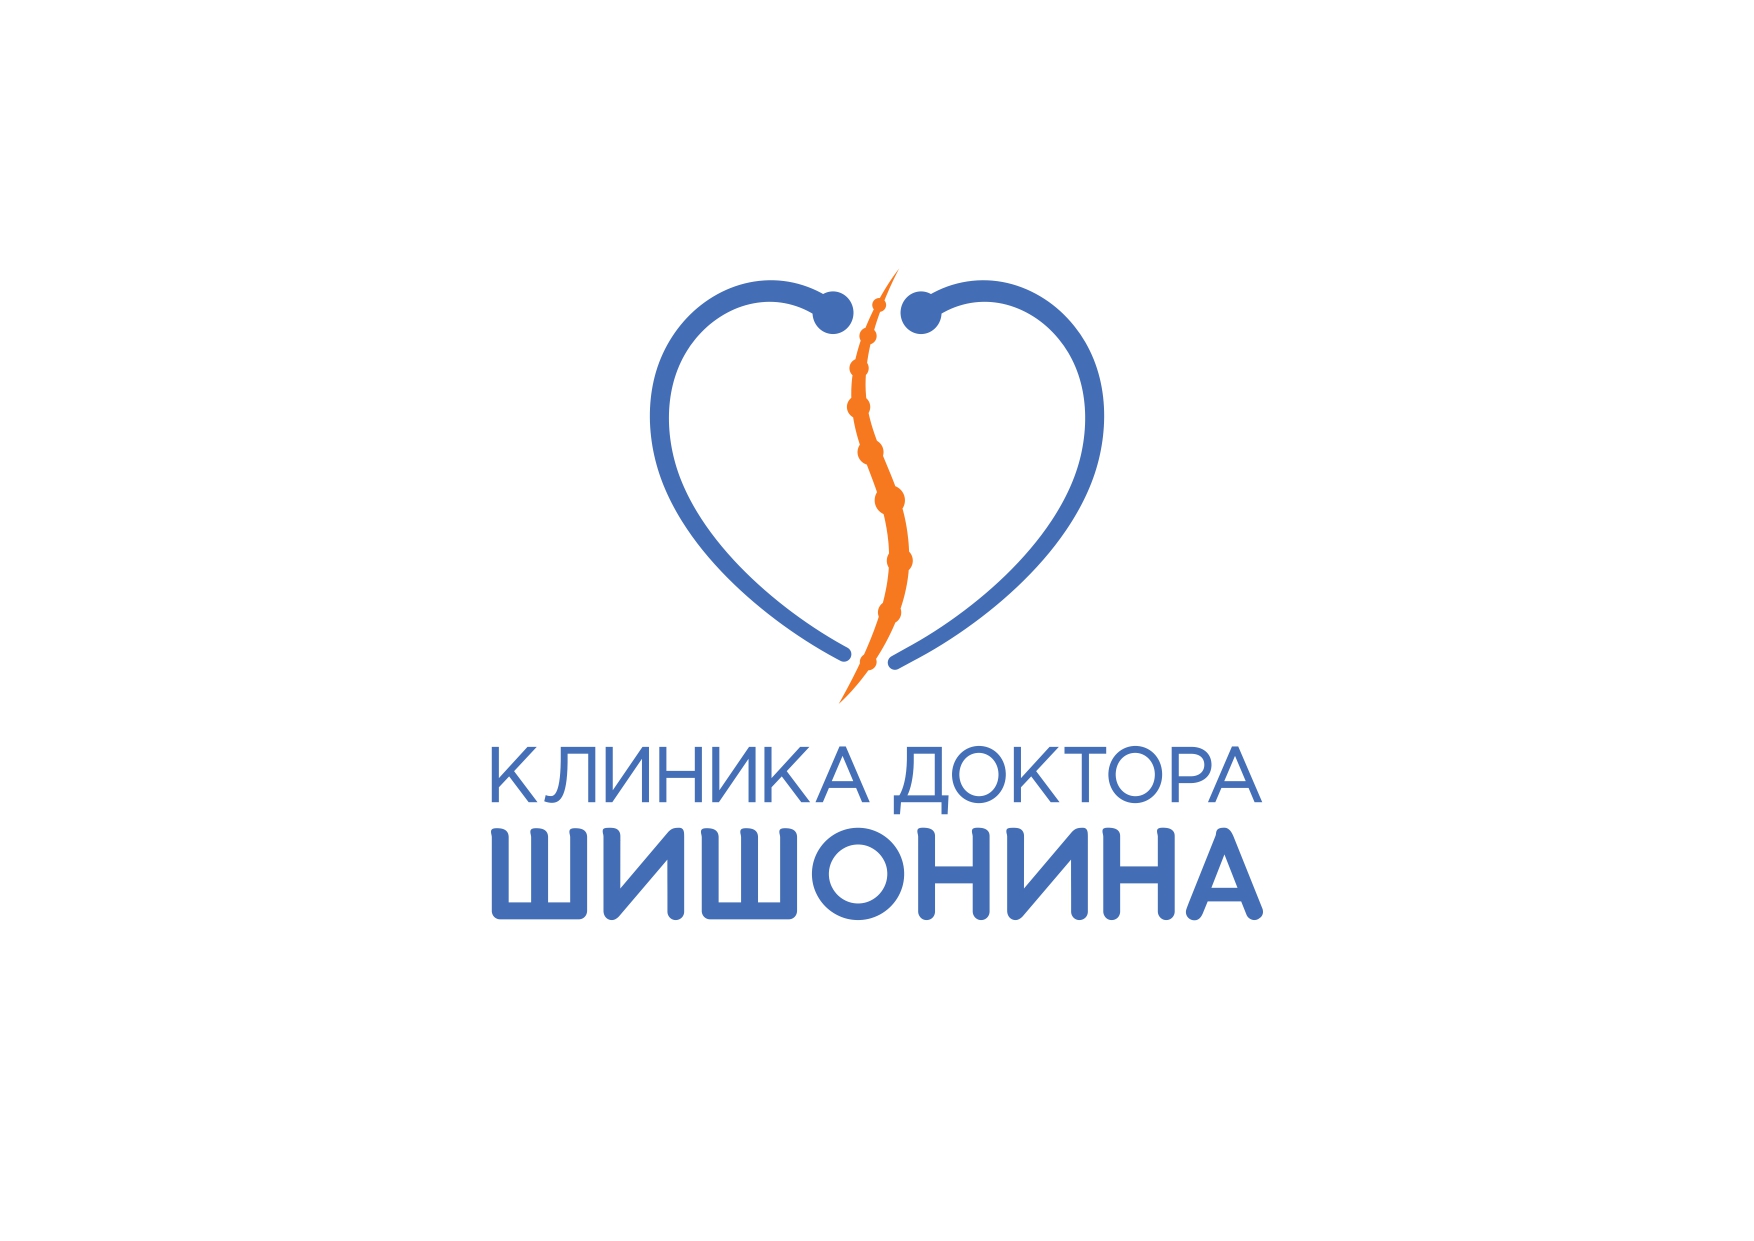 Https shishonin doc ru. Клиника доктора Шишонина. Клиника доктора Шишонина в Москве. Логотип клиники. Клиника доктора Шишонина логотип.